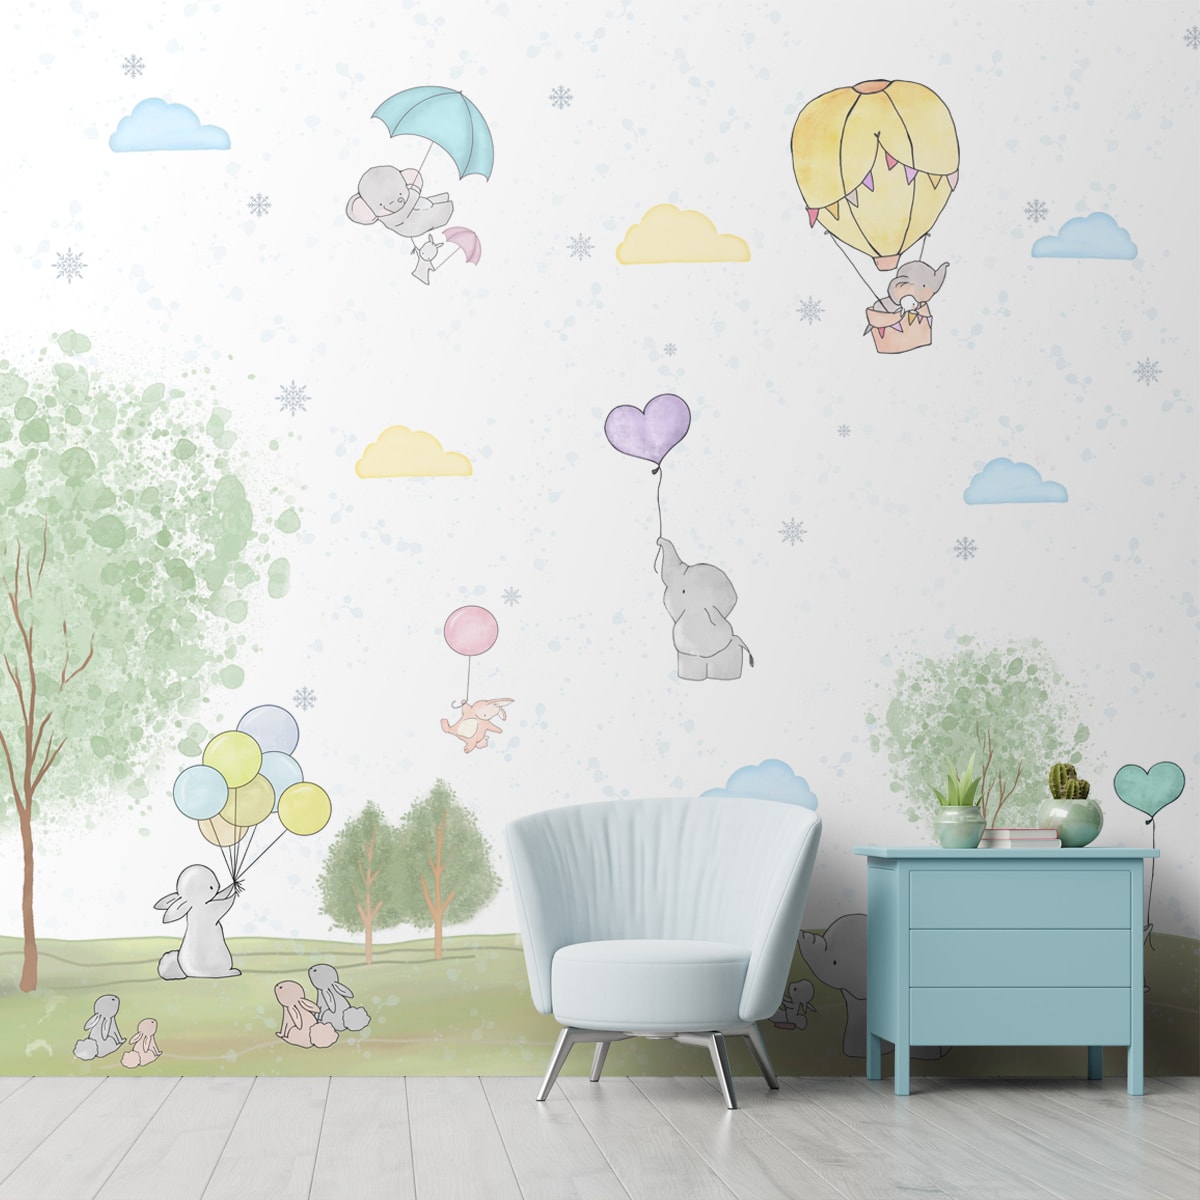 Adorable Bunnies and Elephants, Nursery Room Wallpaper